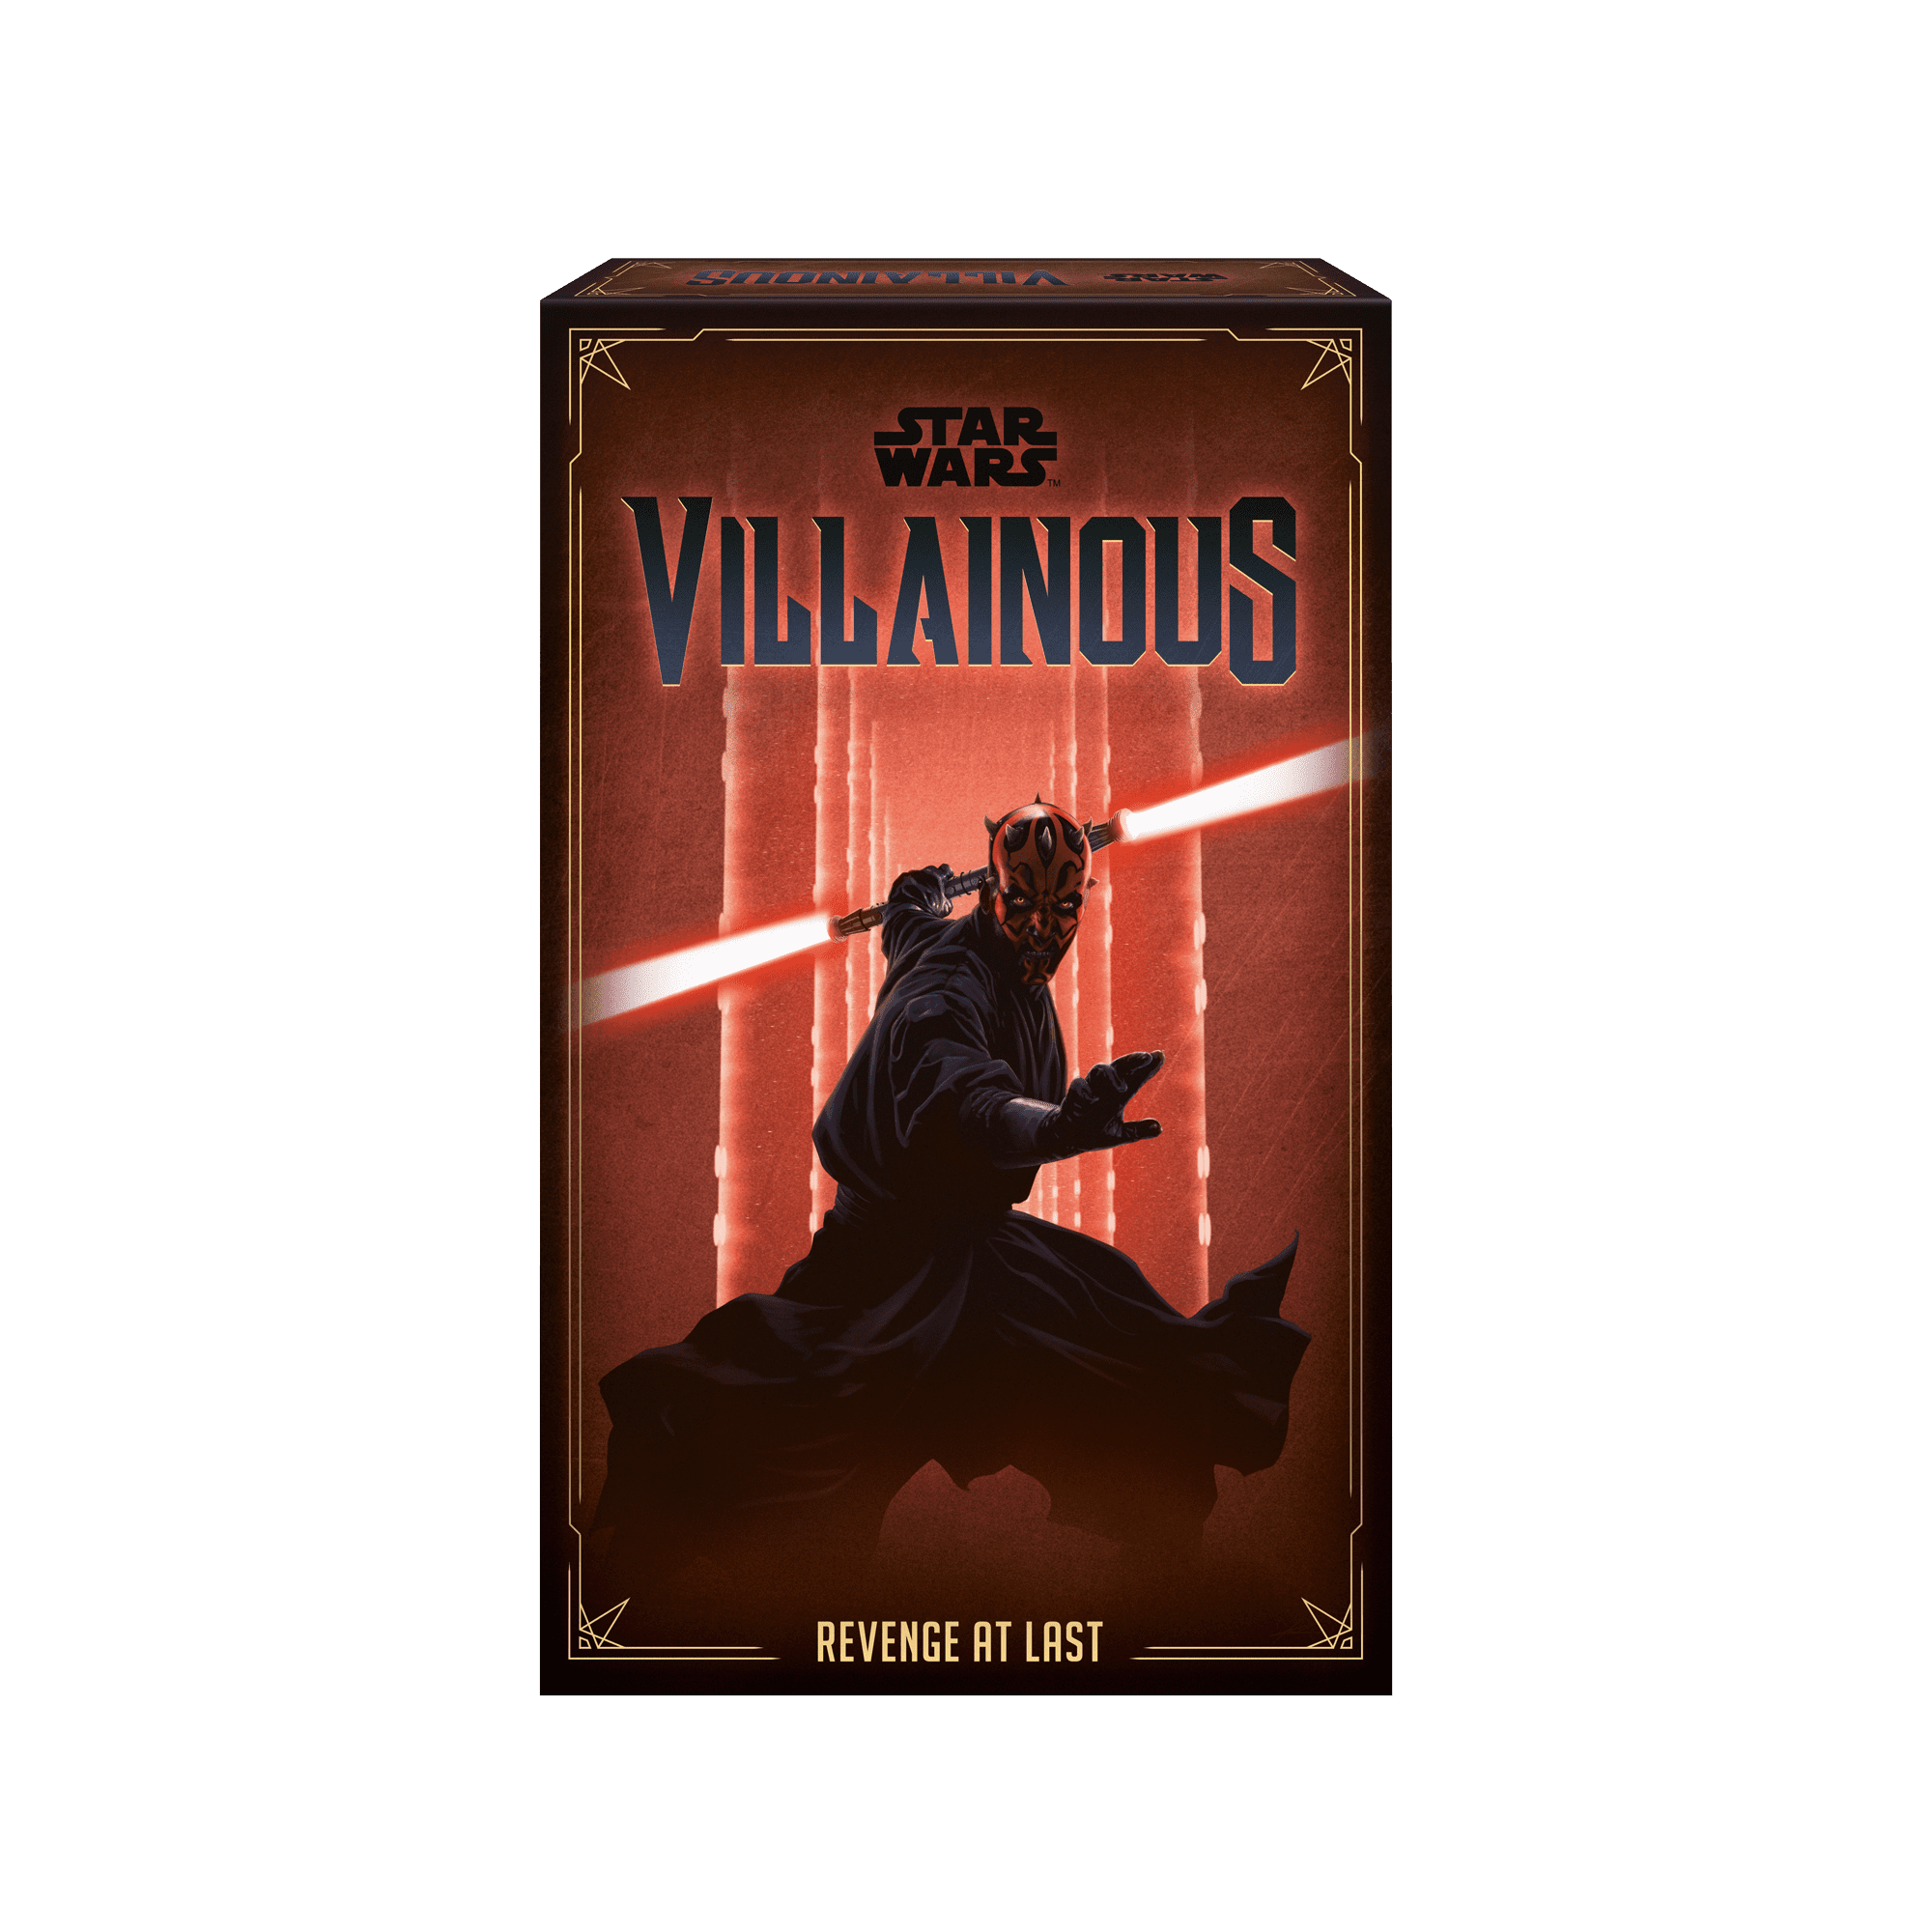 Star Wars Villainous: Revenge At Last box cover